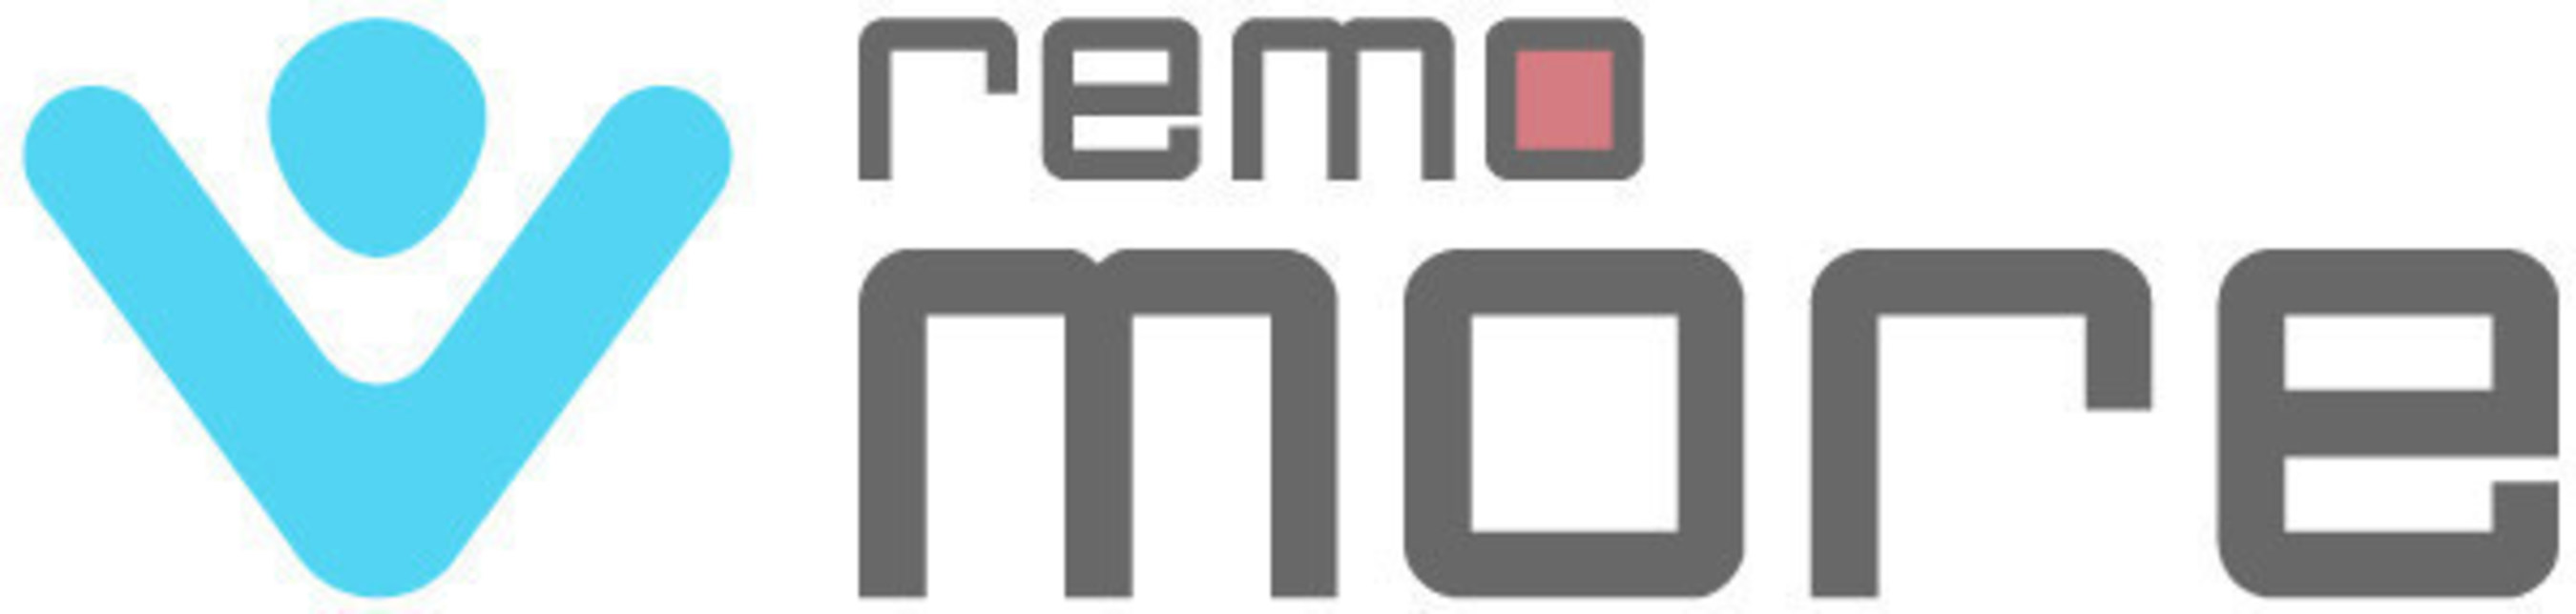 Remo MORE logo